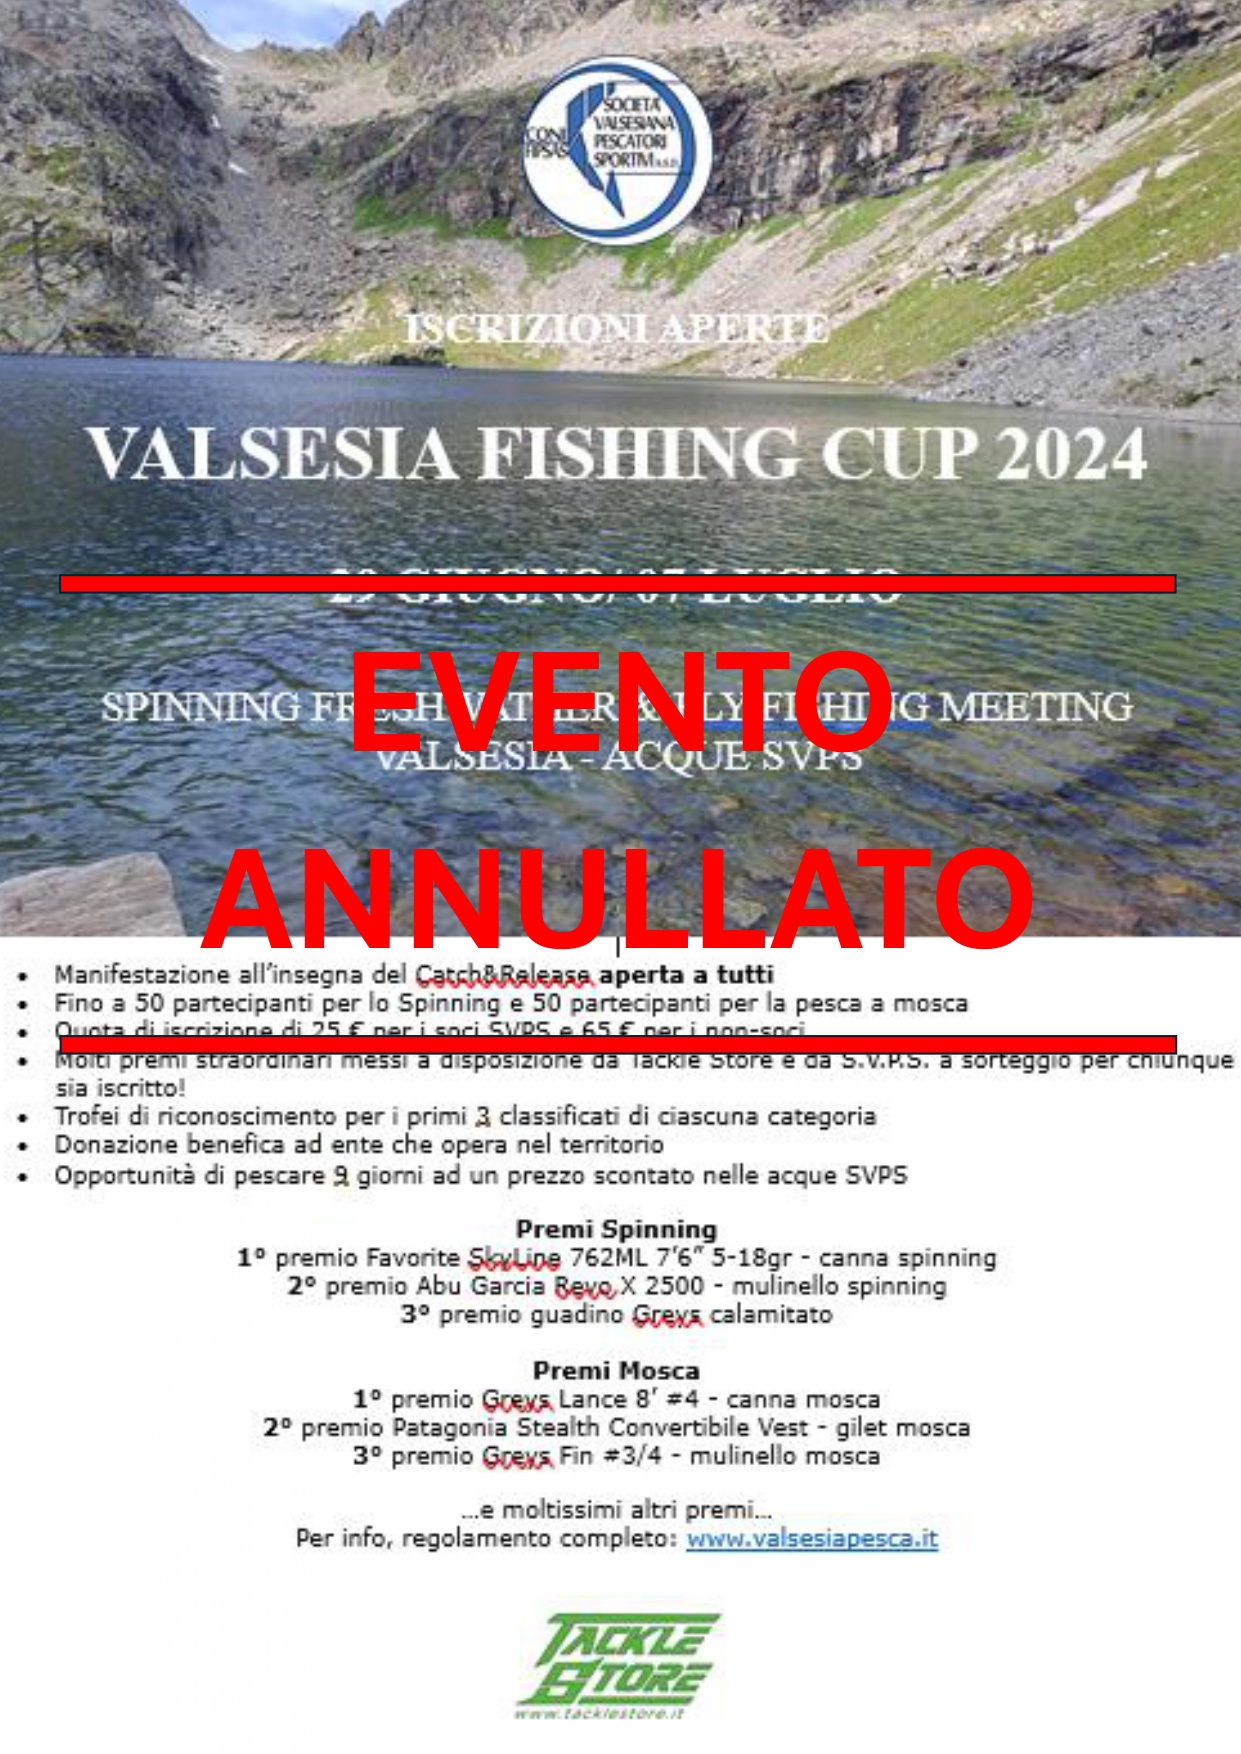 VALSESIA FISHING CUP